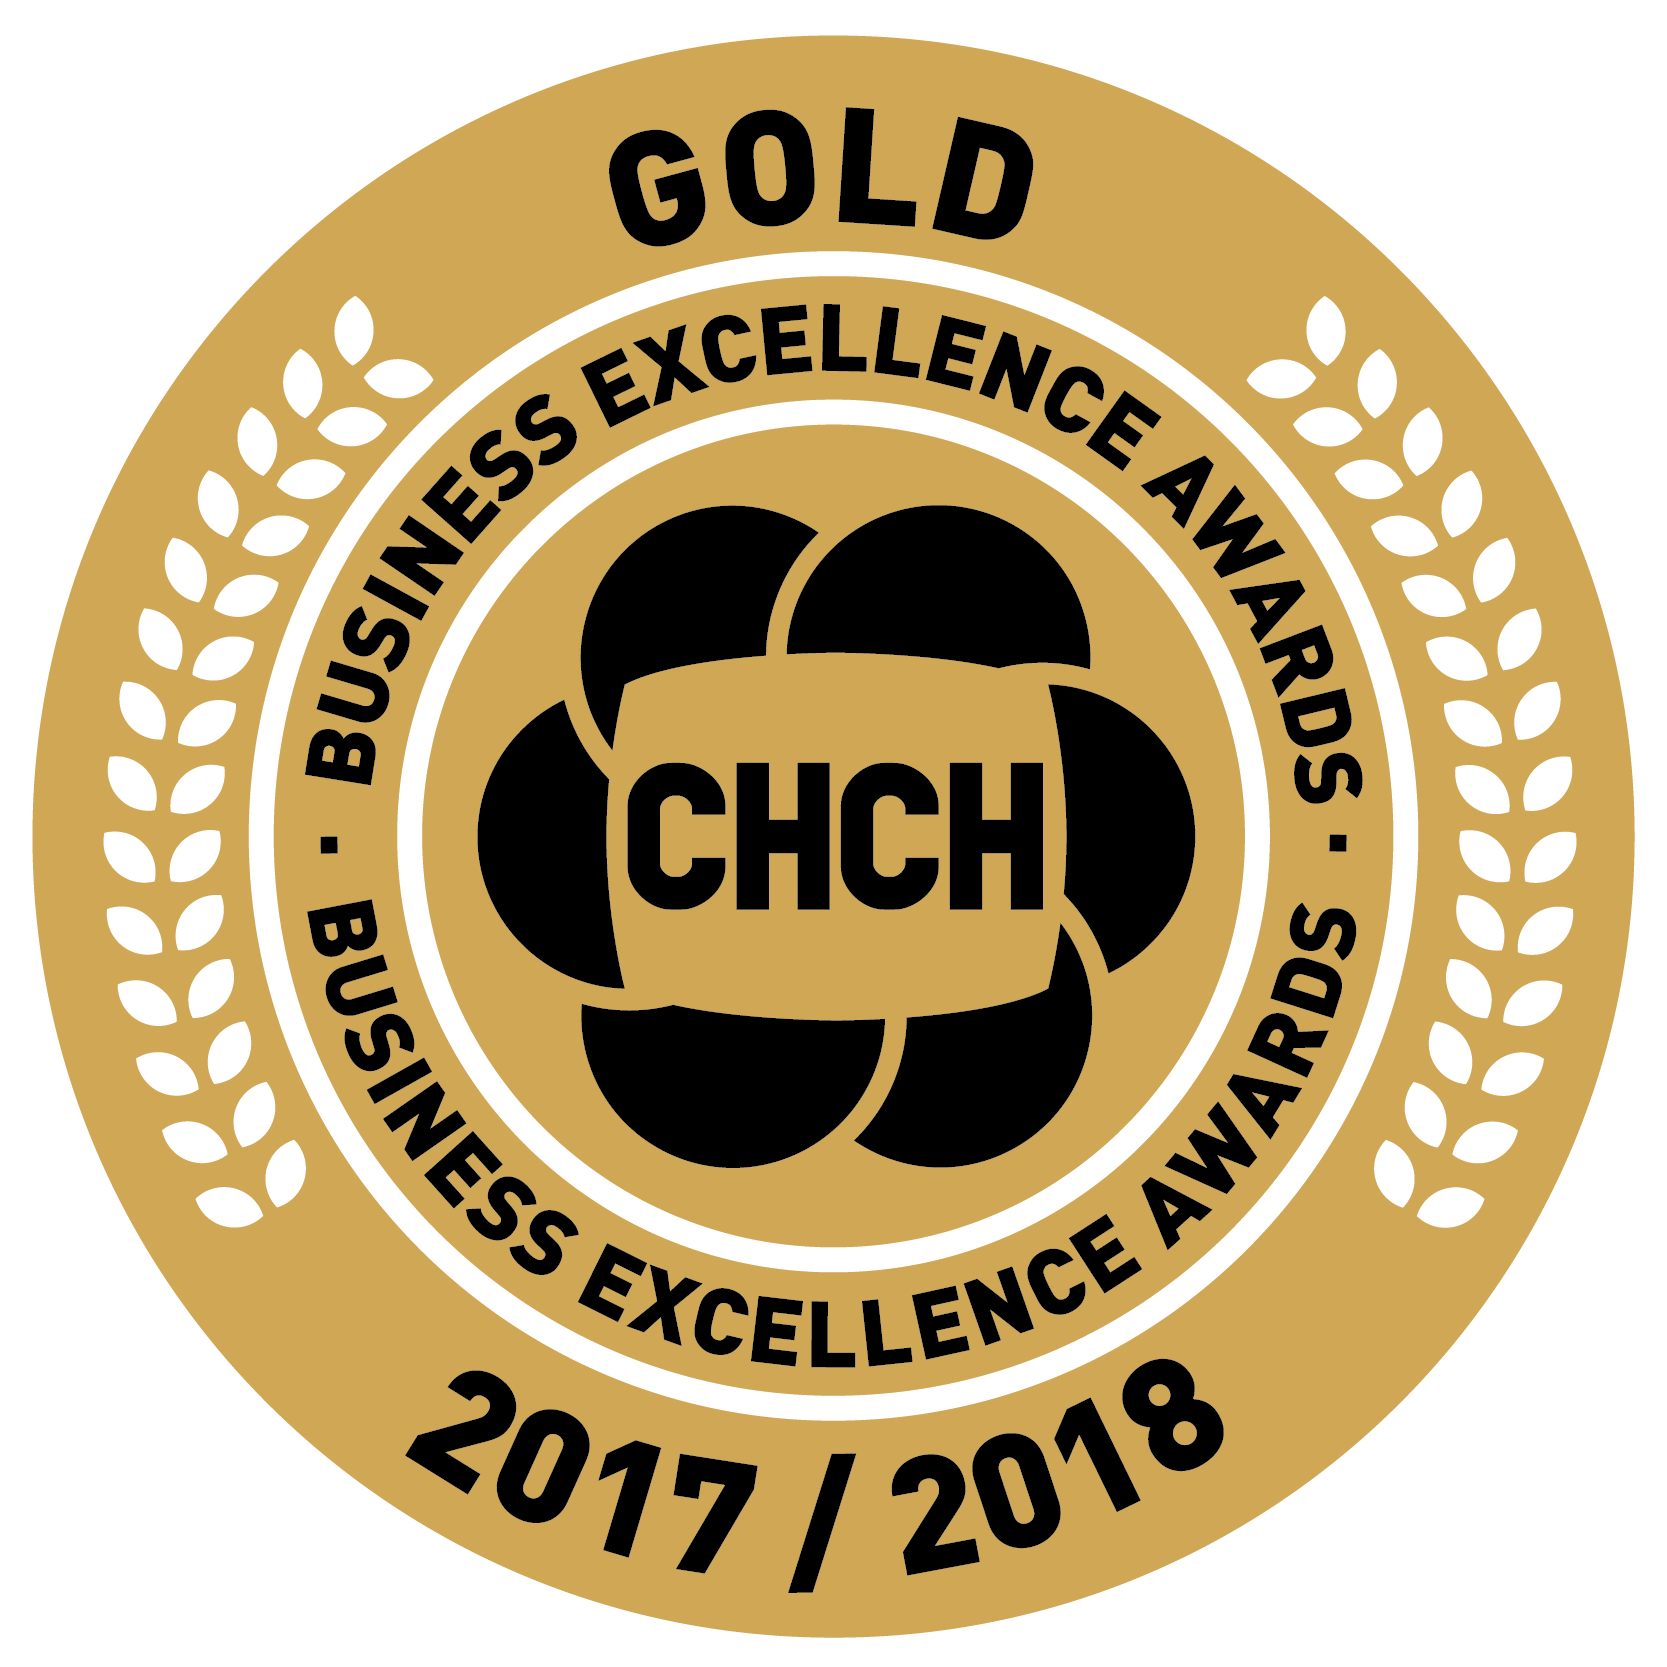 CHCH TV best funeral provider 2017/2018